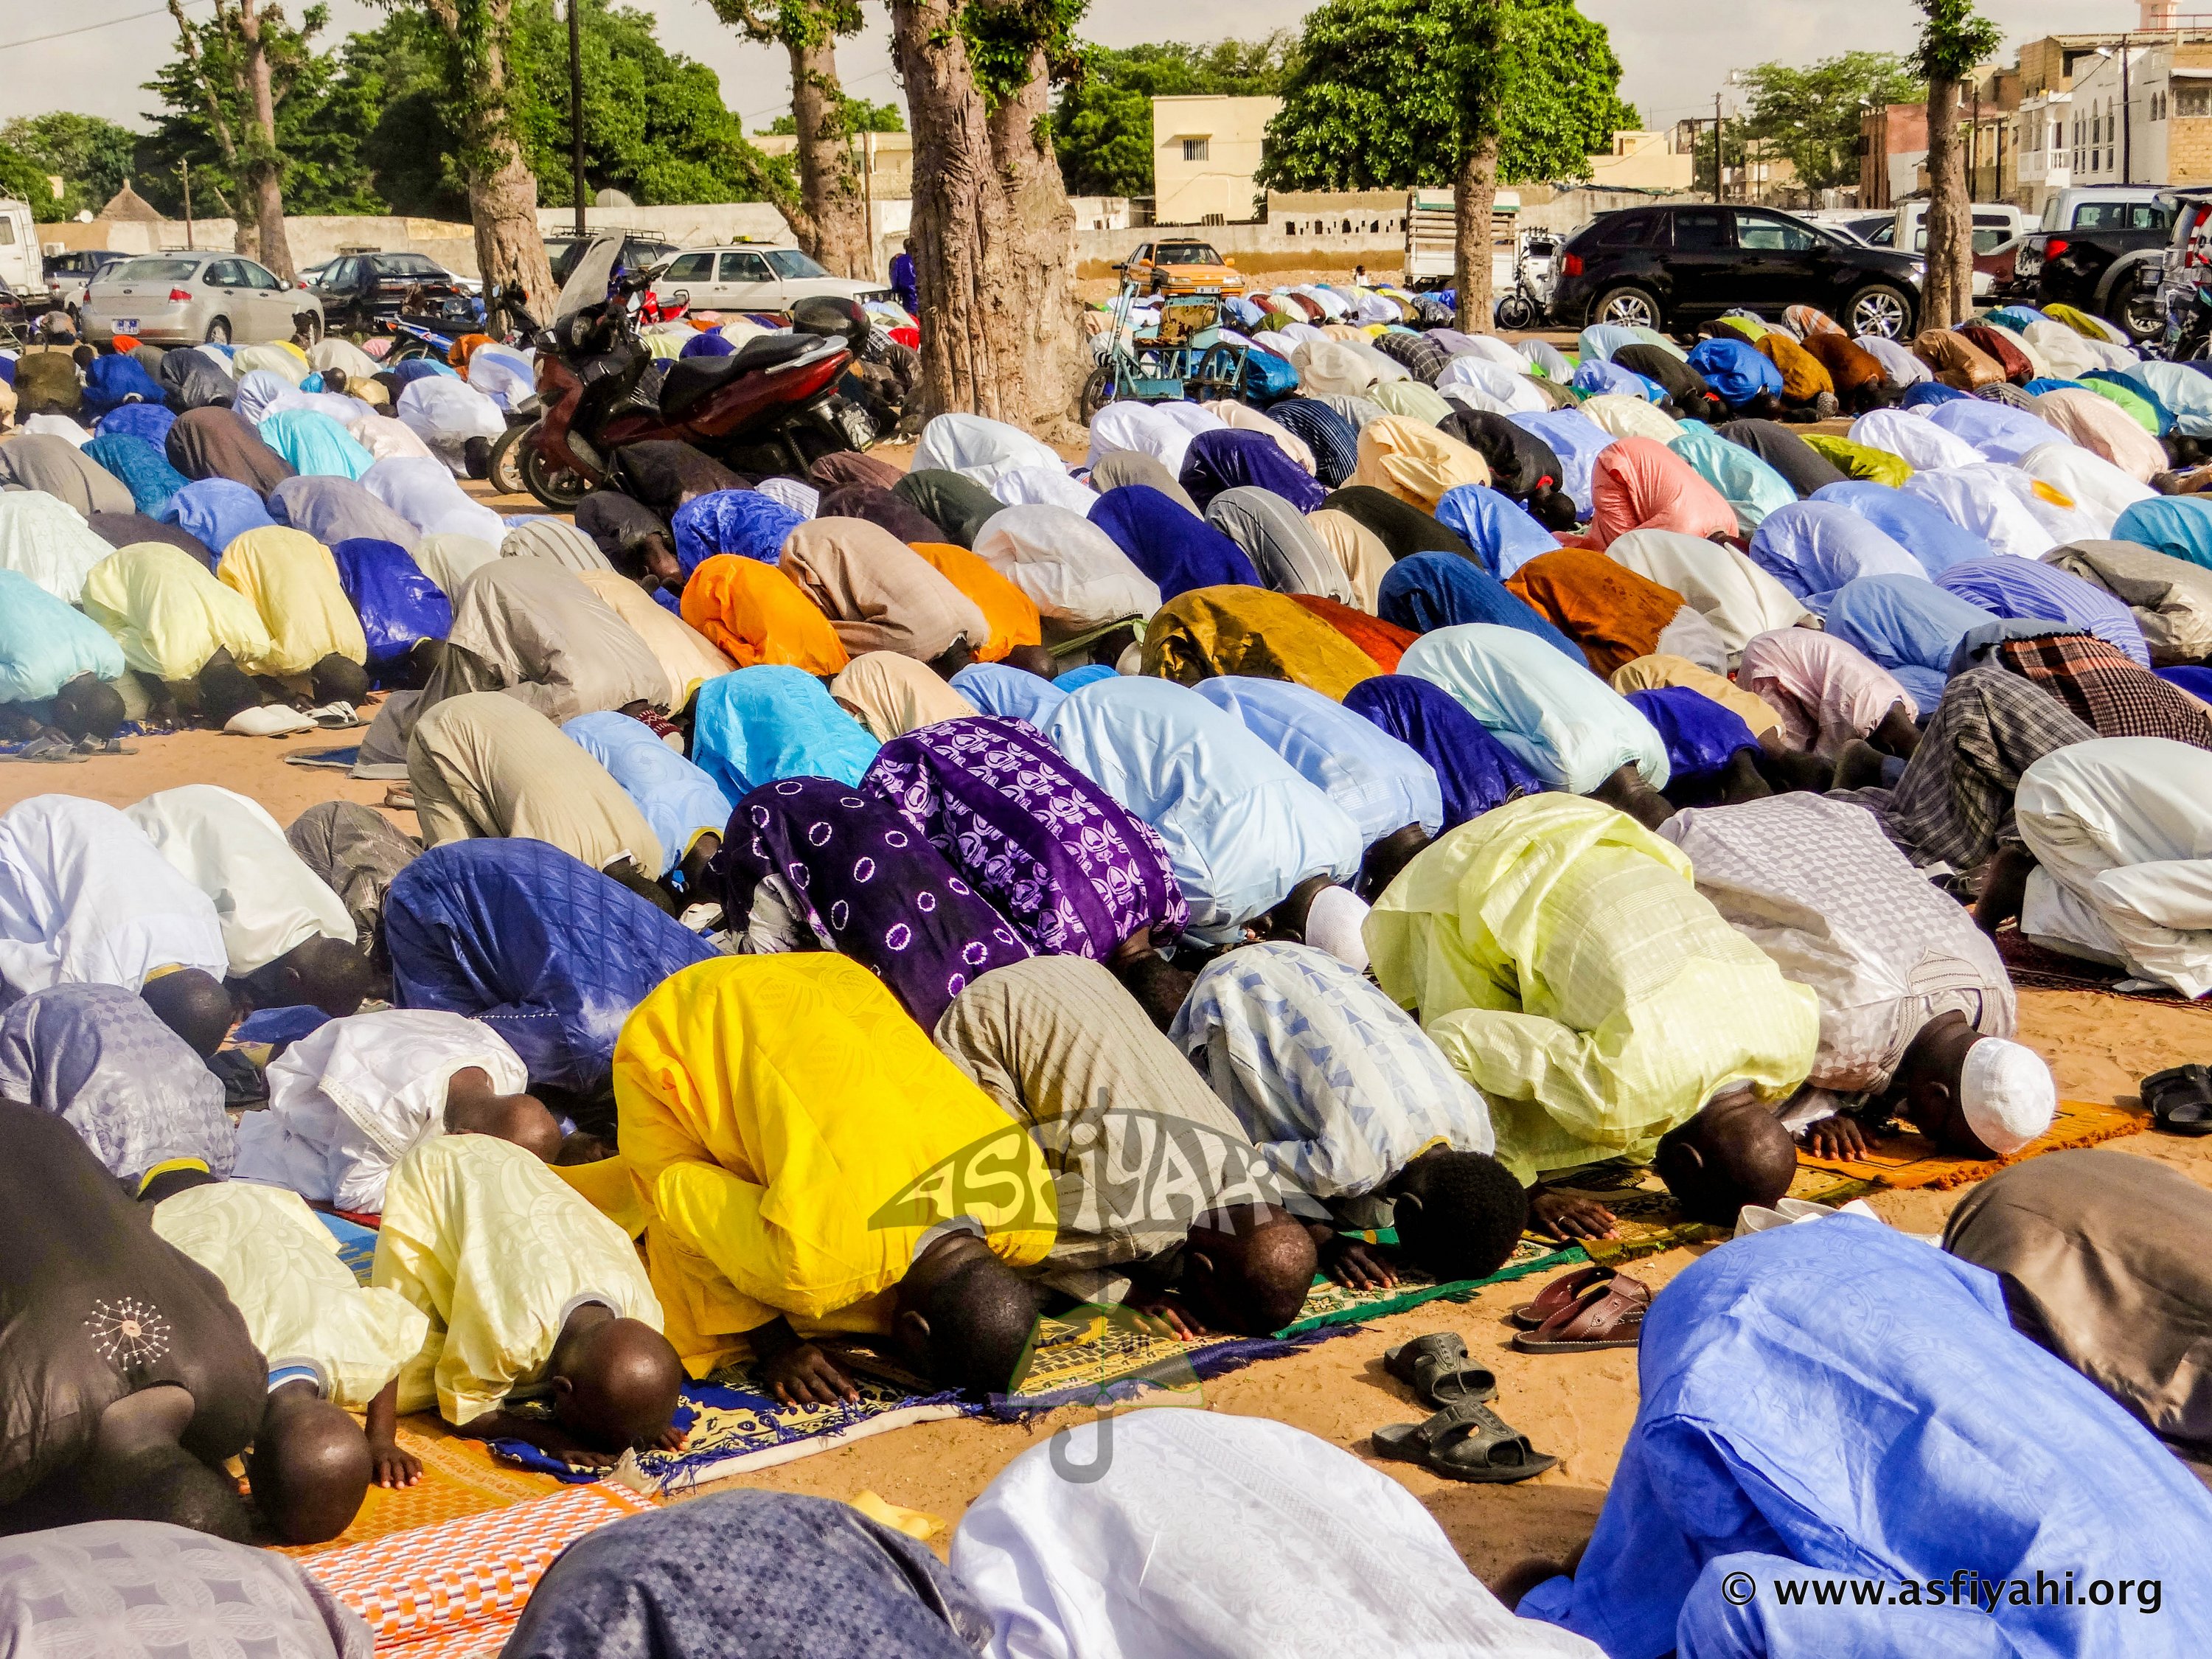 PHOTOS - KORITÉ 2015 À TIVAOUANE : Les Images de la Prière à Kheulkhouss dirigée par Serigne Mbaye Sy Abdou صلاة عيد الفطر بمدينة تواون  السنغال